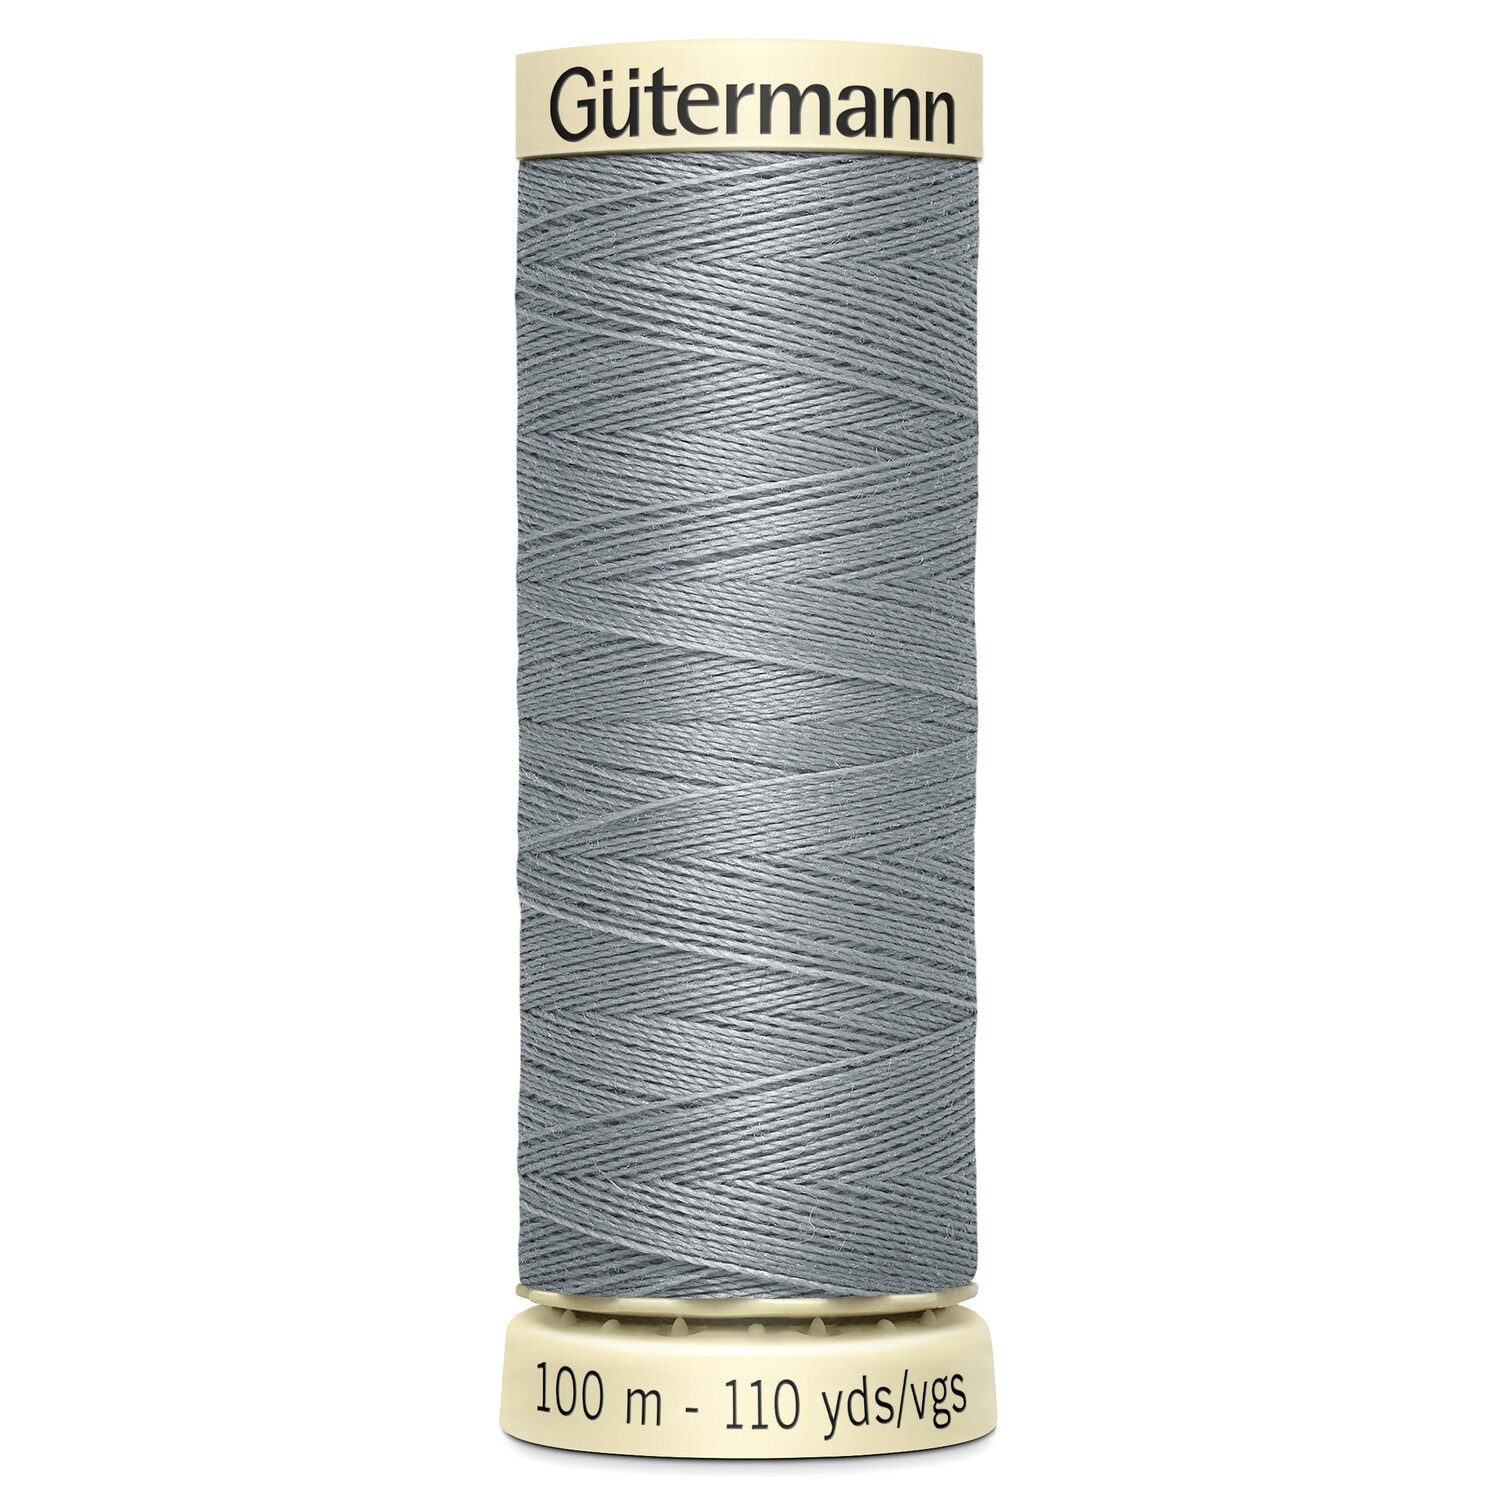 Gutermann Sew-All thread 40